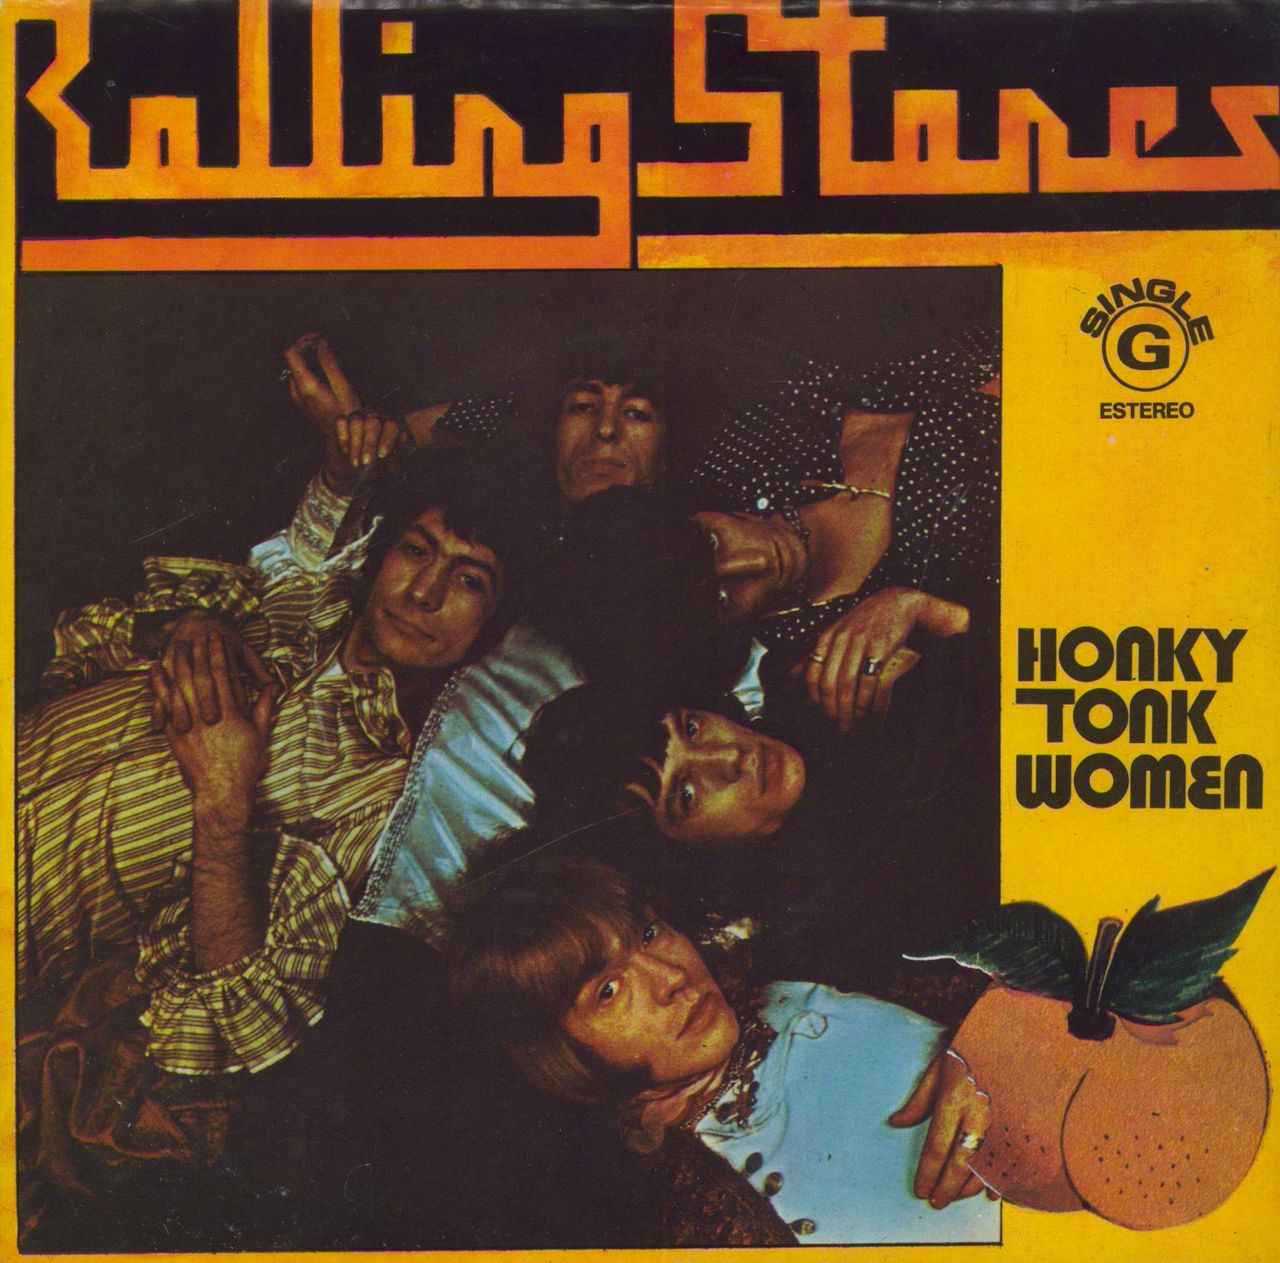 The Rolling Stones Honky Tonk Women Portugese 7 vinyl — RareVinyl.com